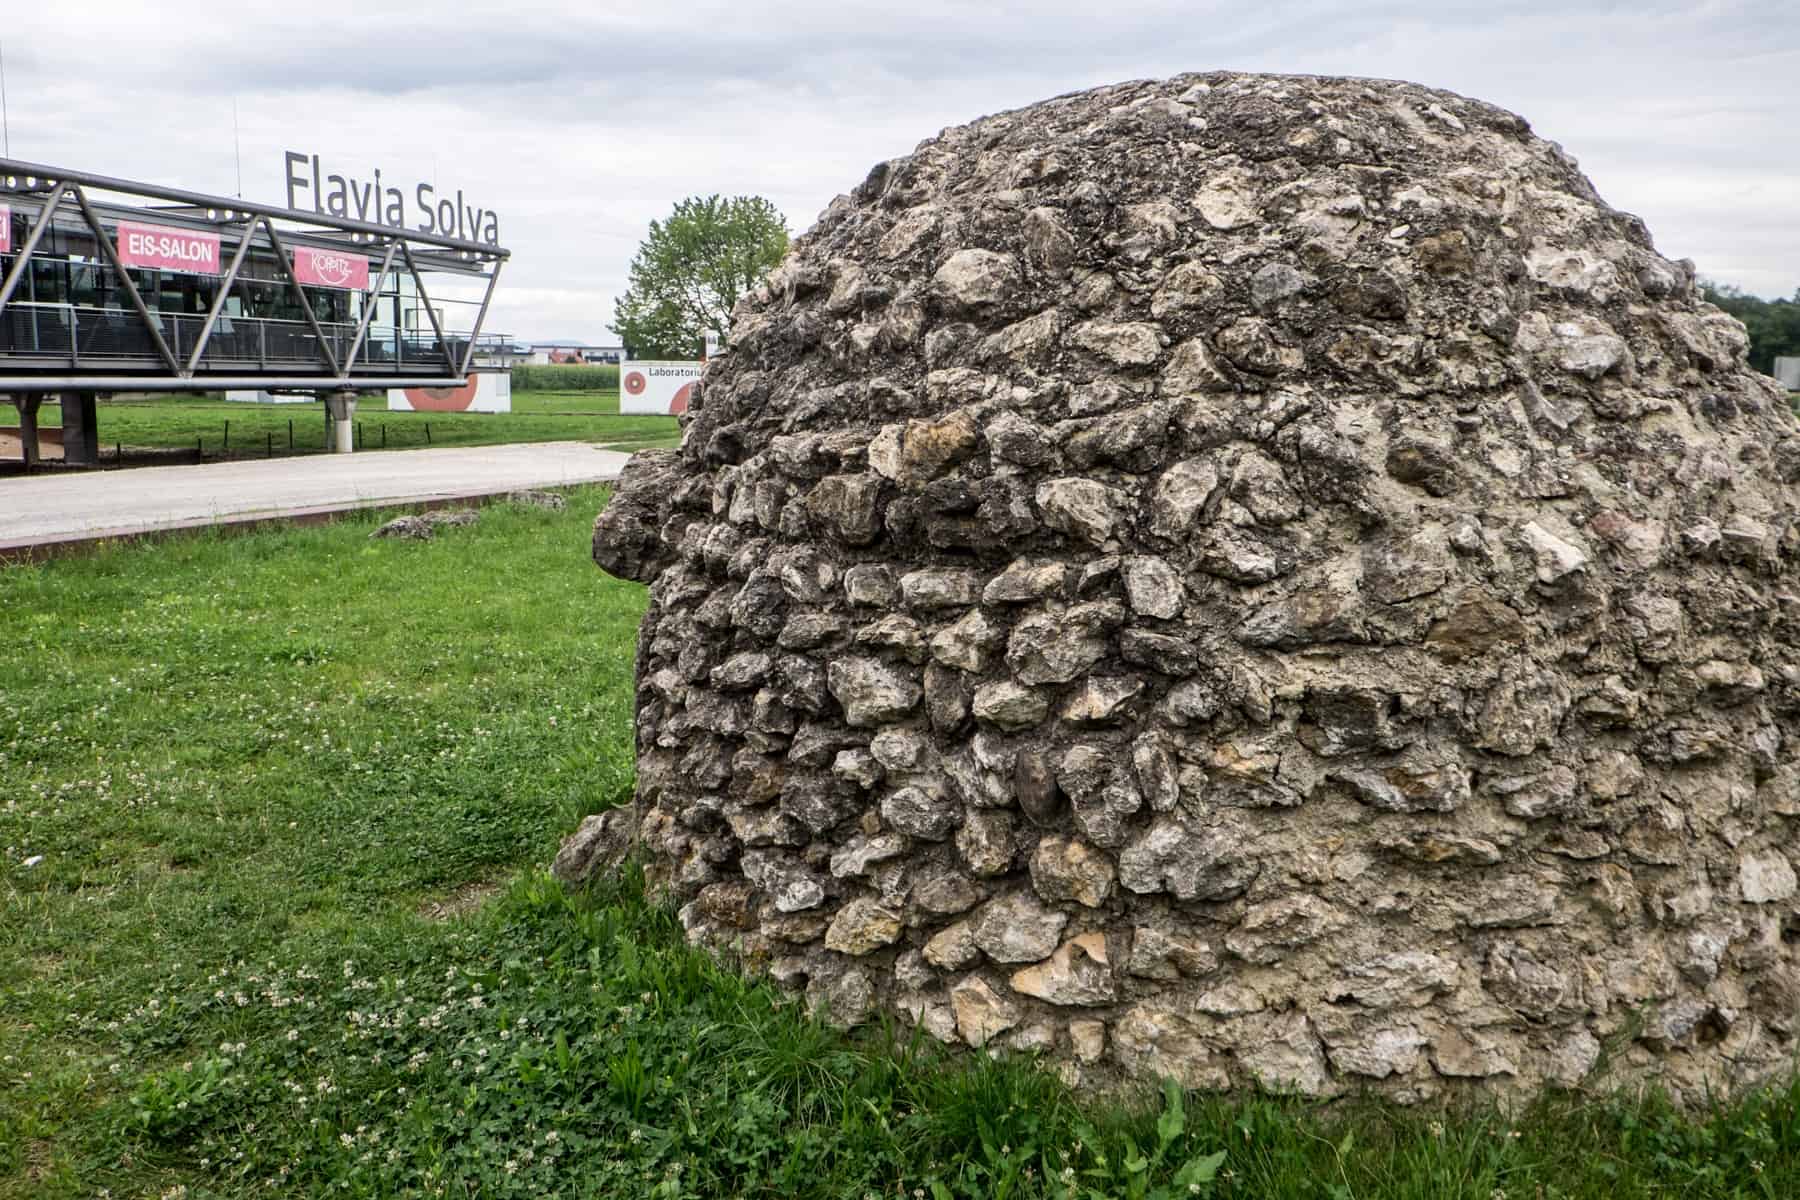 Stone burial mounds on the site of old roman town Flavia Solva in Steiermark, Austria